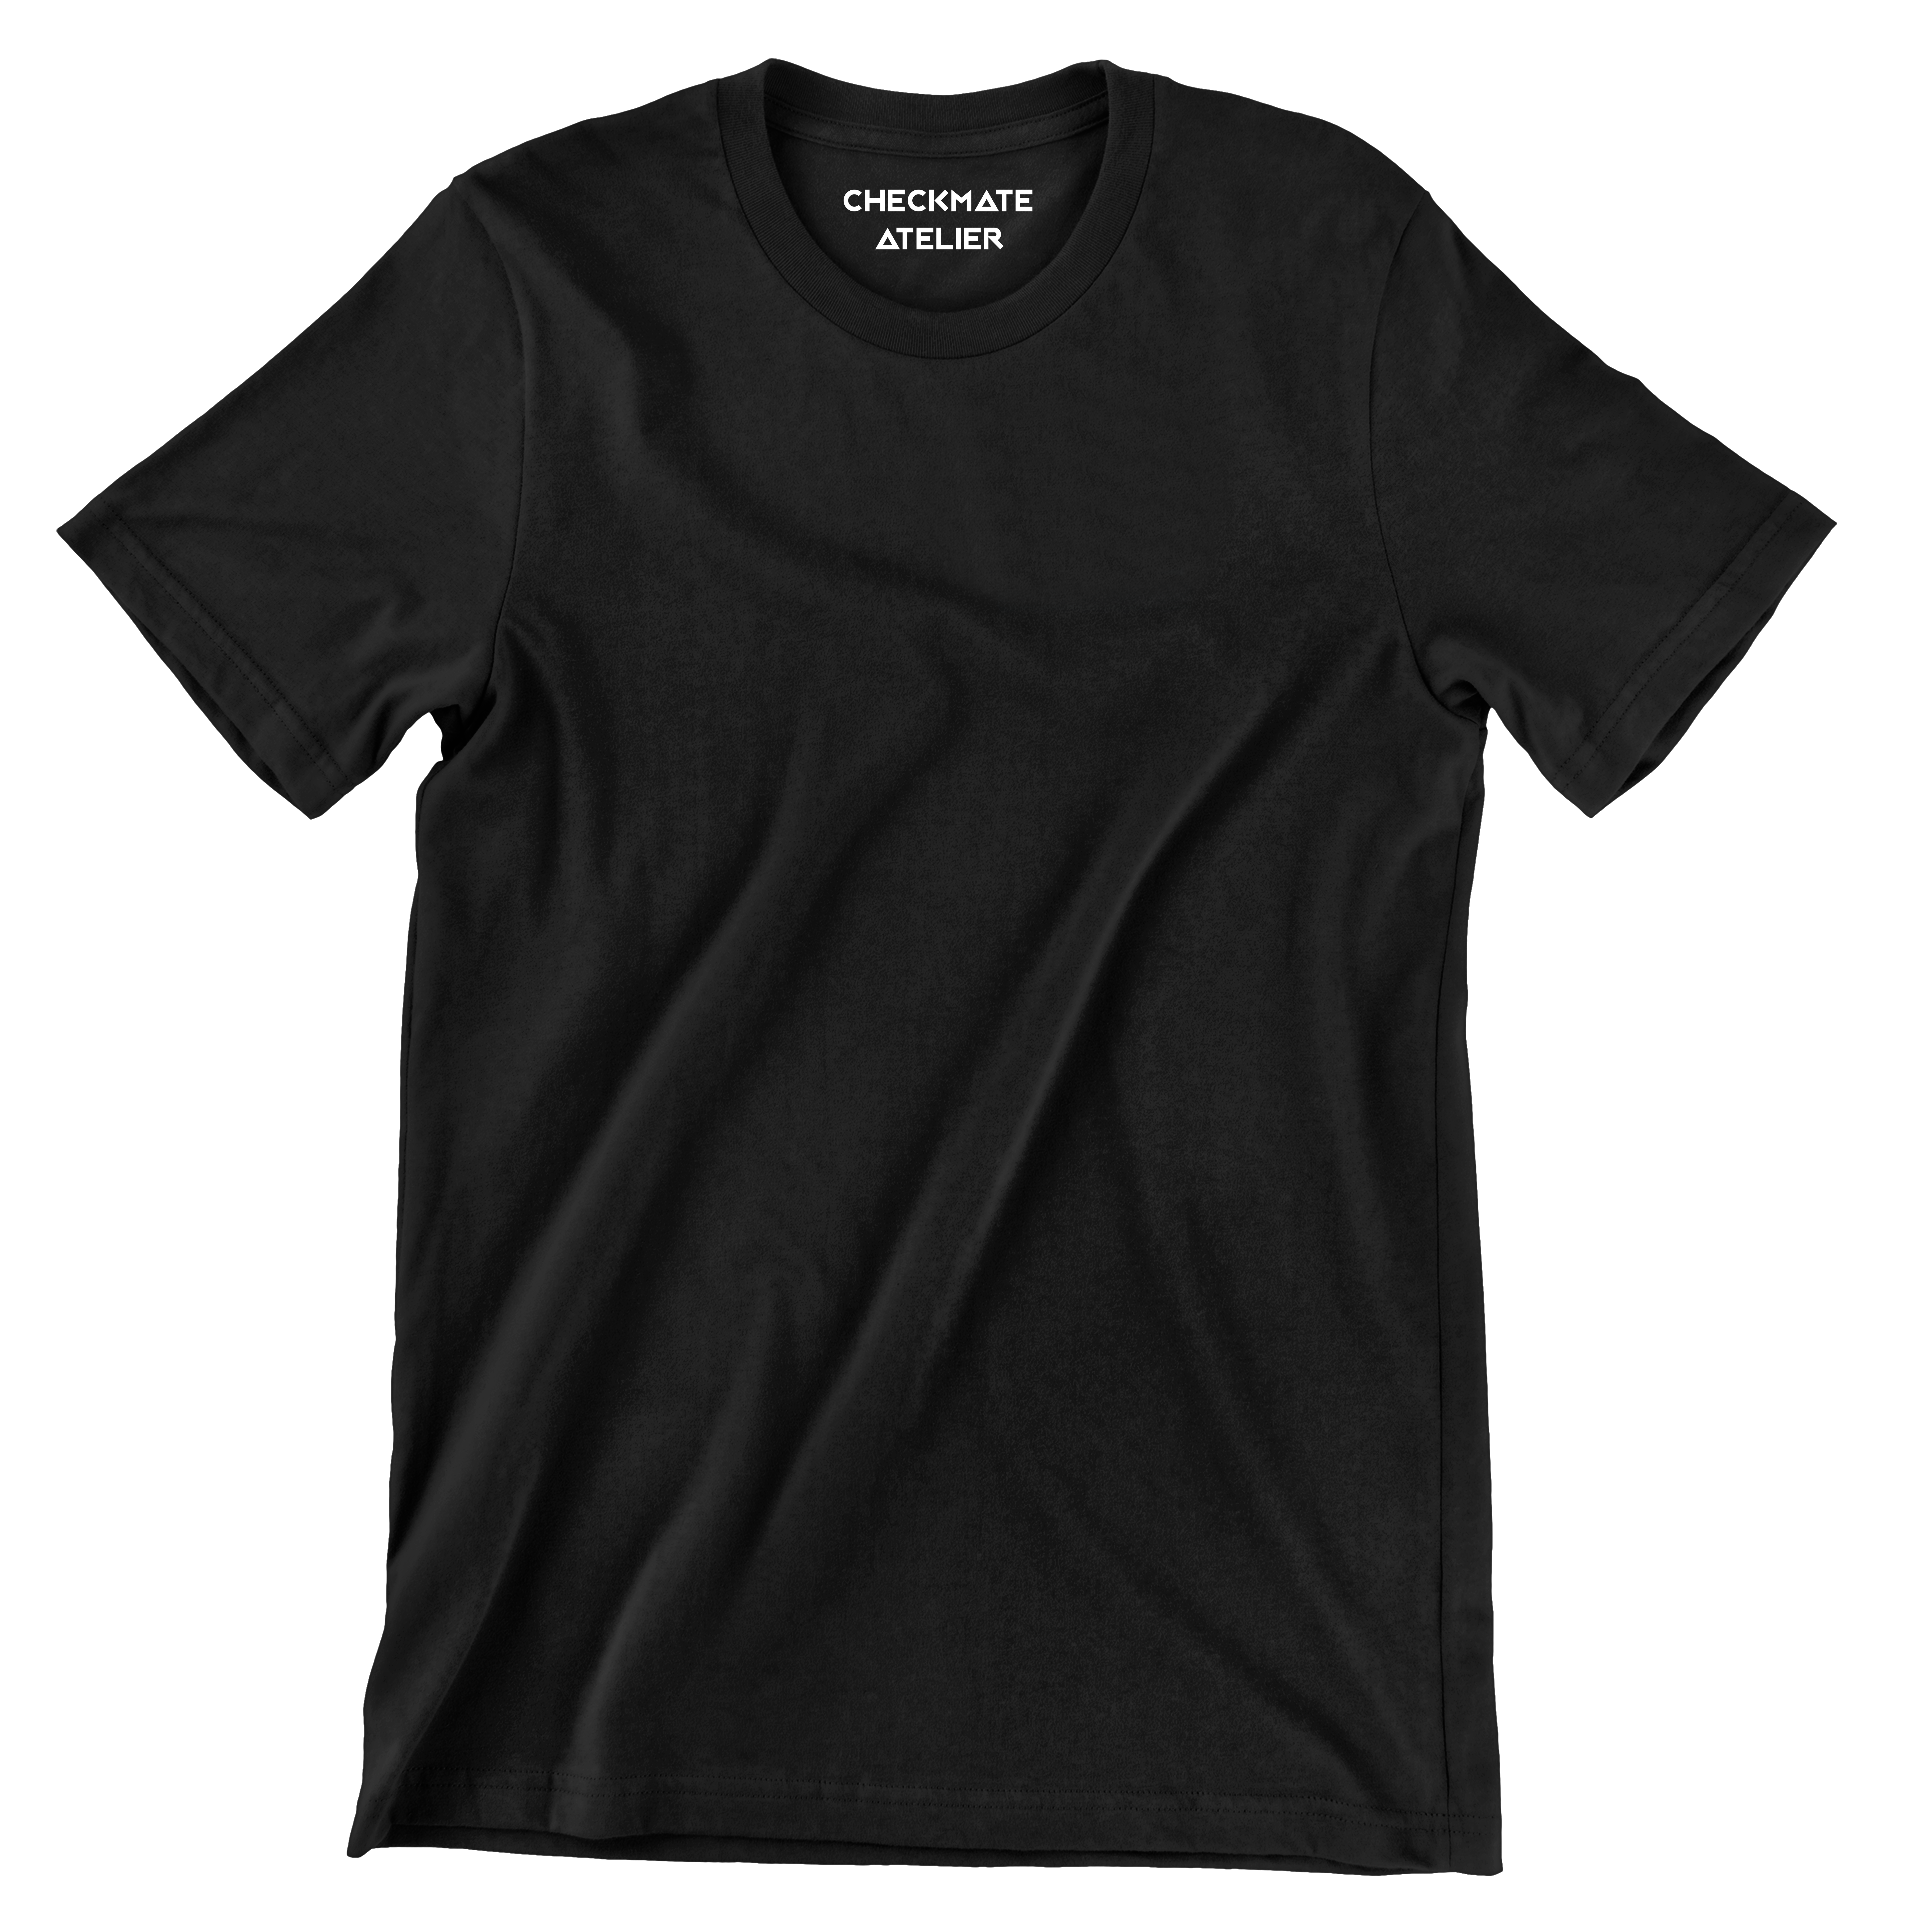 Black Round Neck T-Shirt - Shop Now - Checkmate Atelier